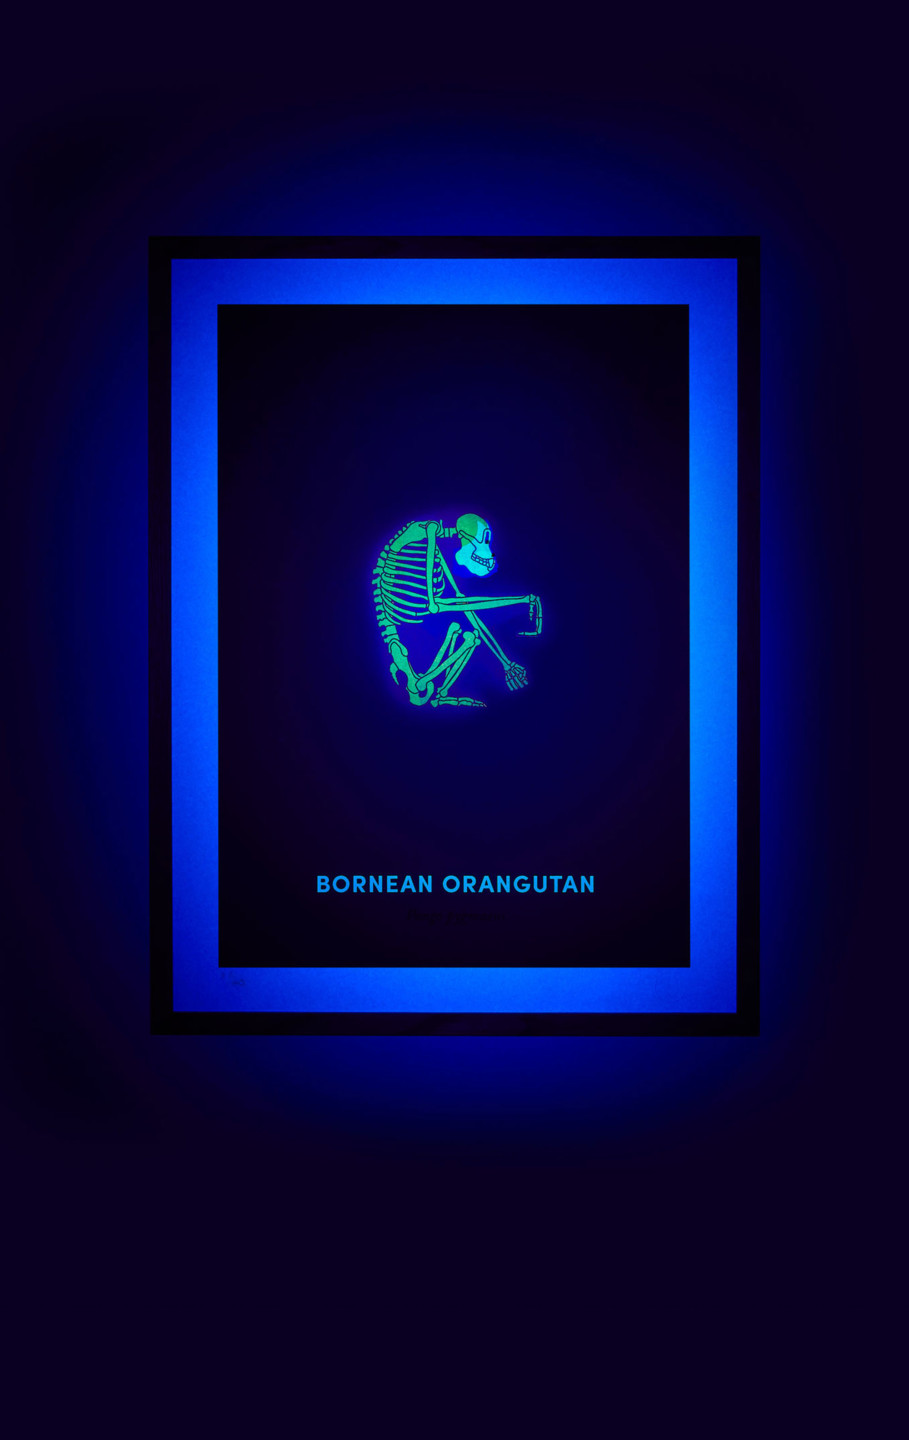 Bornean Orangutan screen print under UV light - shown on hover